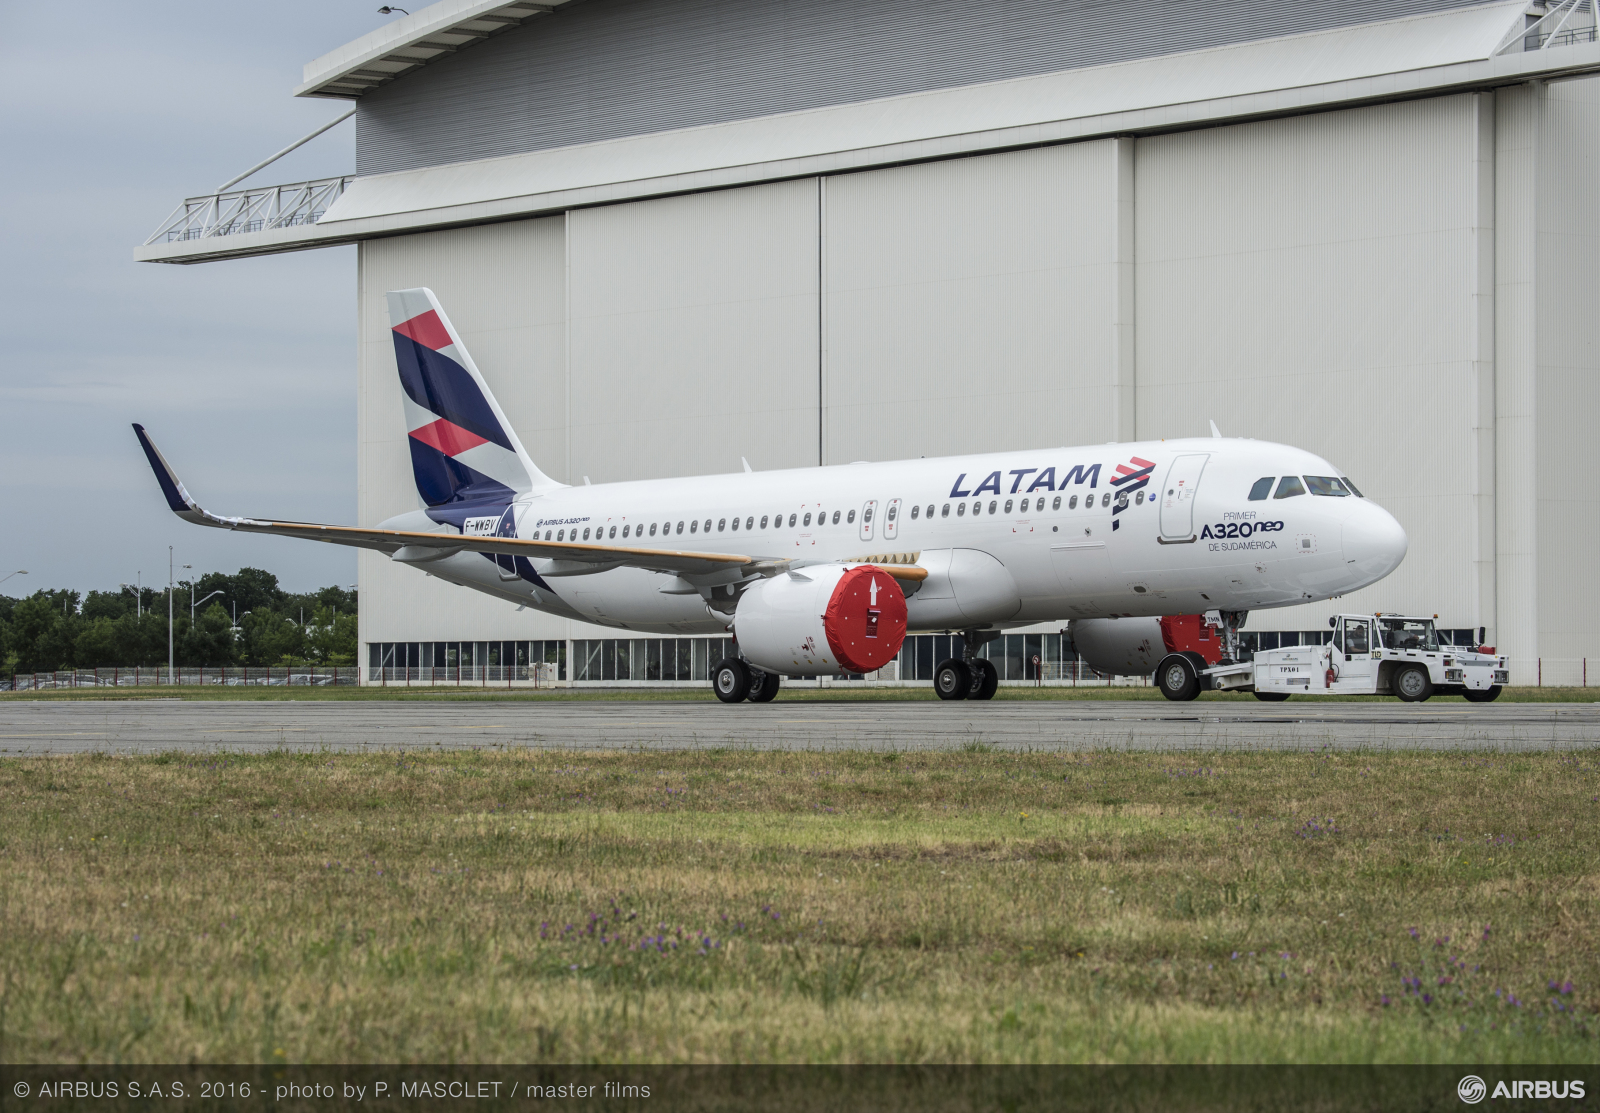 Novedades del Airbus A320neo Igynbs